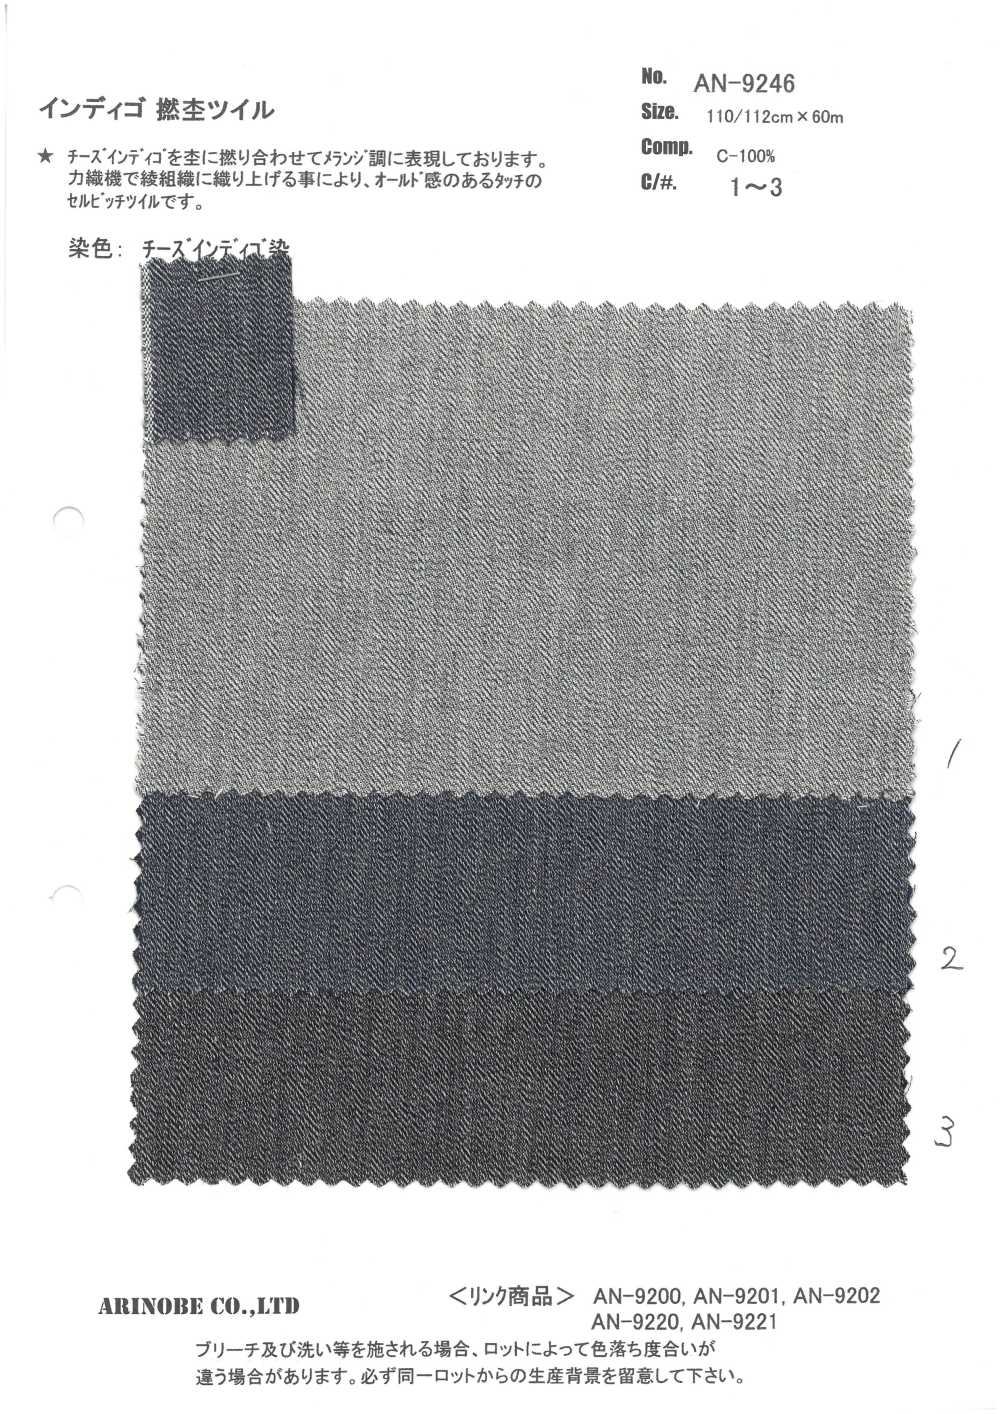 AN-9246 Sarga Retorcida índigo[Fabrica Textil] ARINOBE CO., LTD.